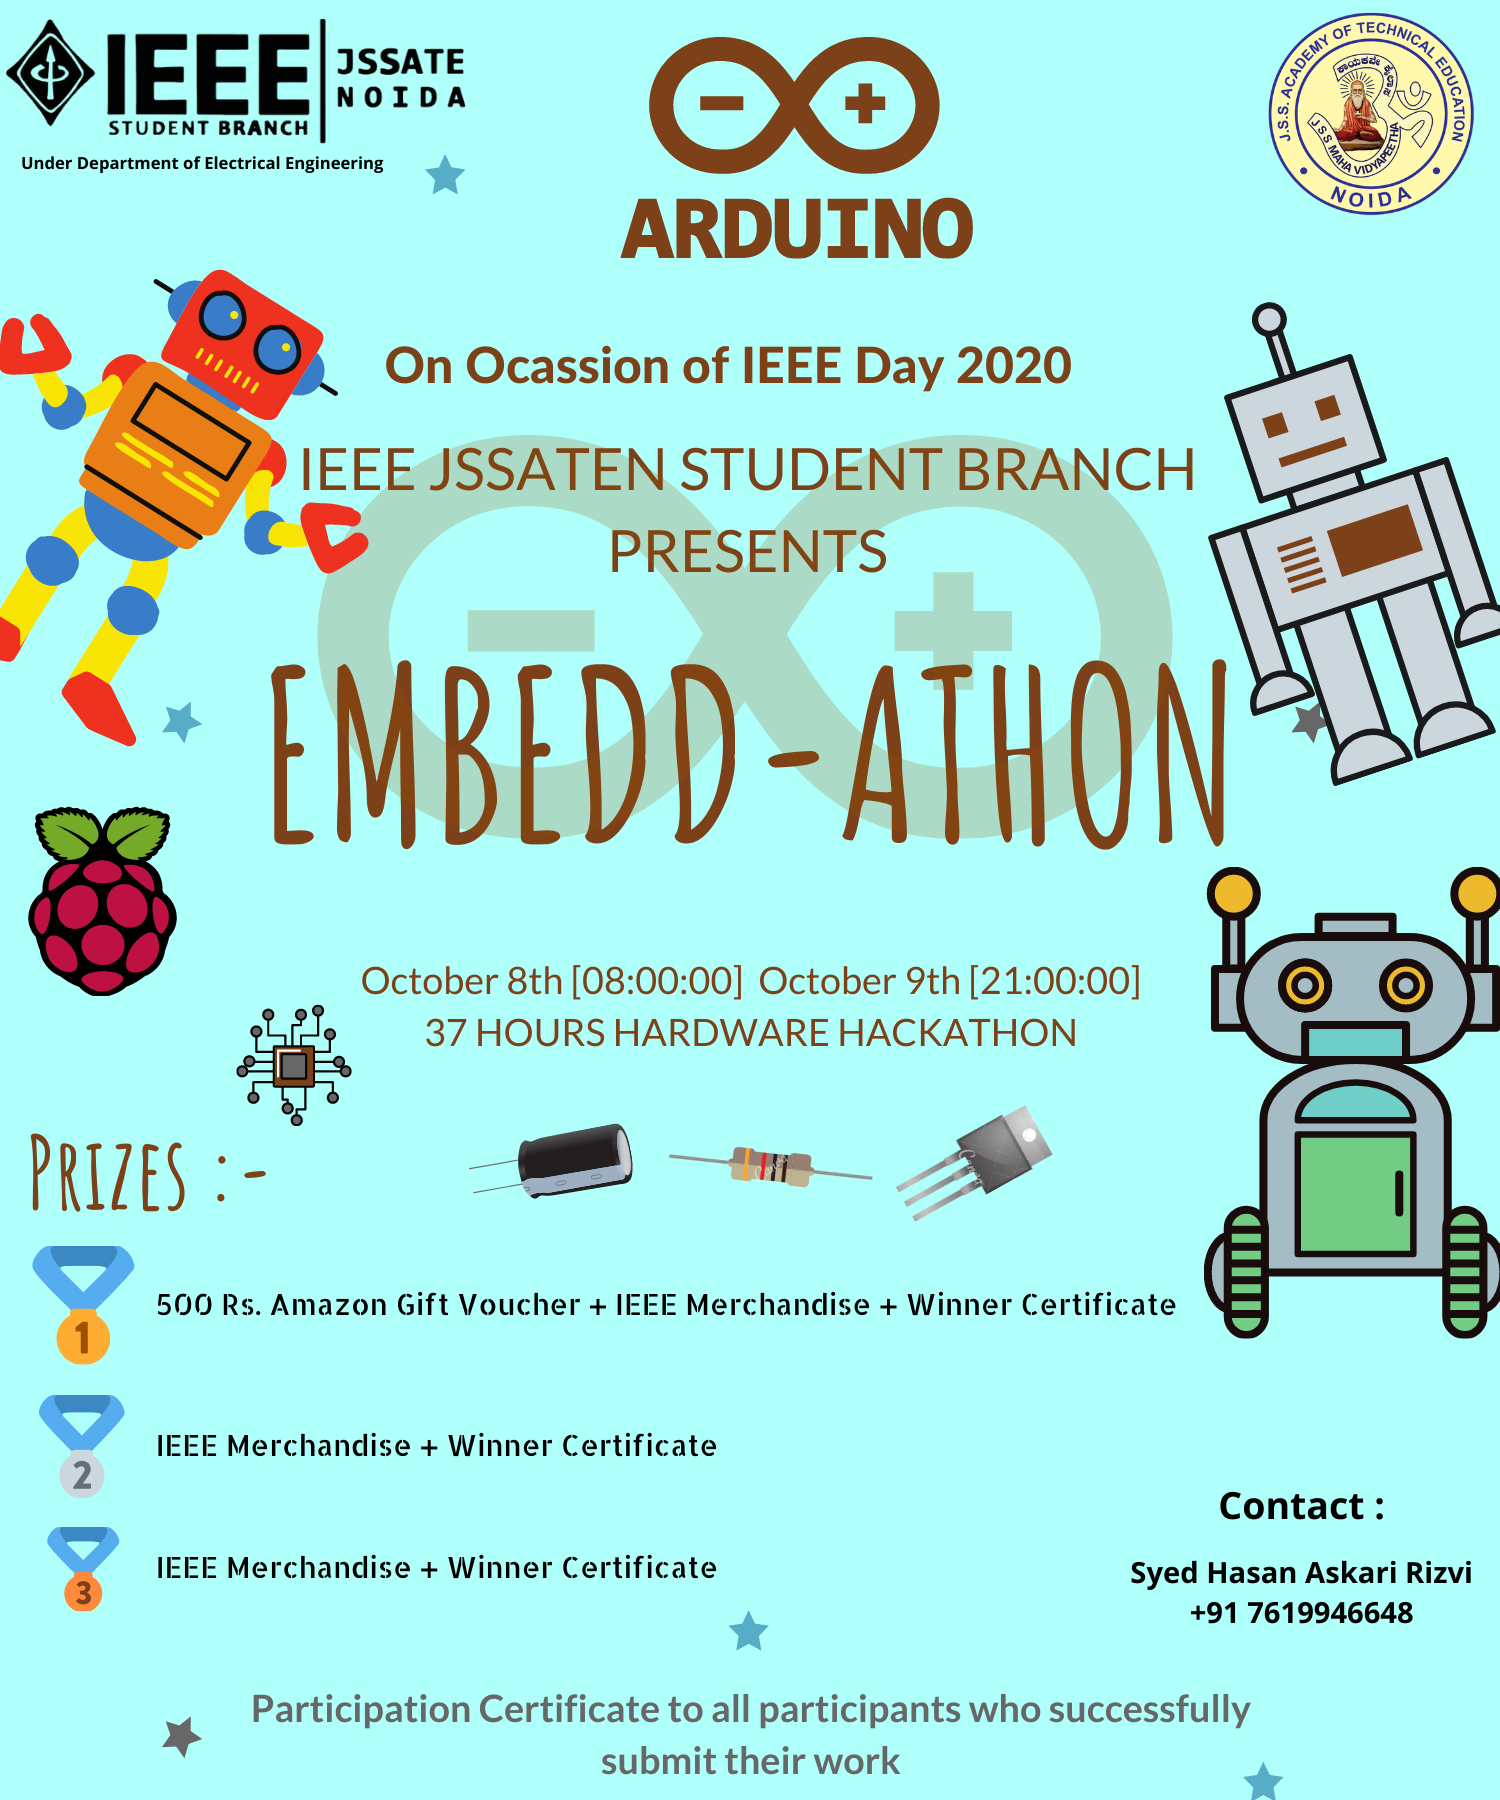 EMBEDD-ATHON Poster